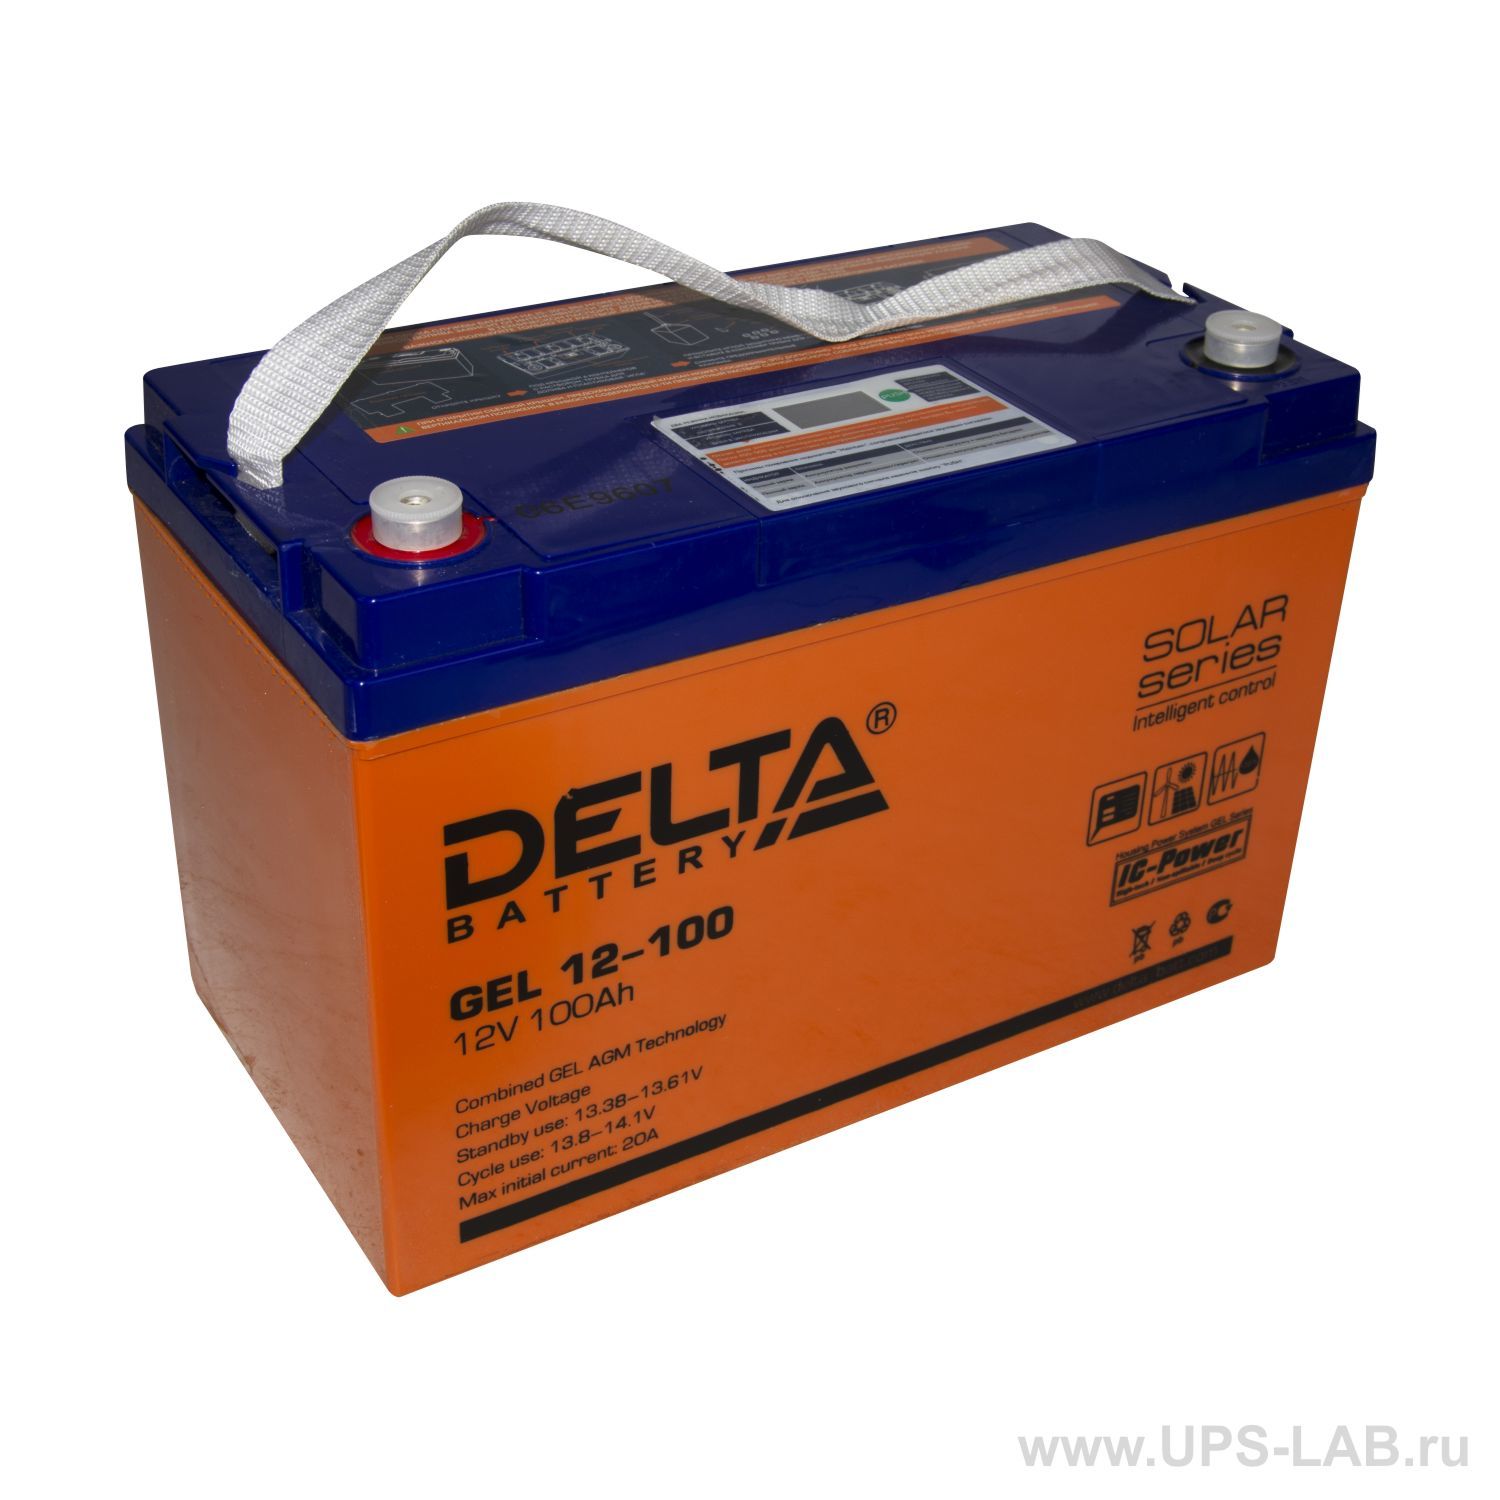 Аккумулятор 12v gel. Аккумуляторная батарея Delta Gel 12-100 (12v / 100ah). Аккумулятор гелевый Delta Gel 12-100. Аккумулятор Дельта 100ач гелевый. Батарея аккумуляторная для ИБП Delta Gel 12-100 12в, 100ач.